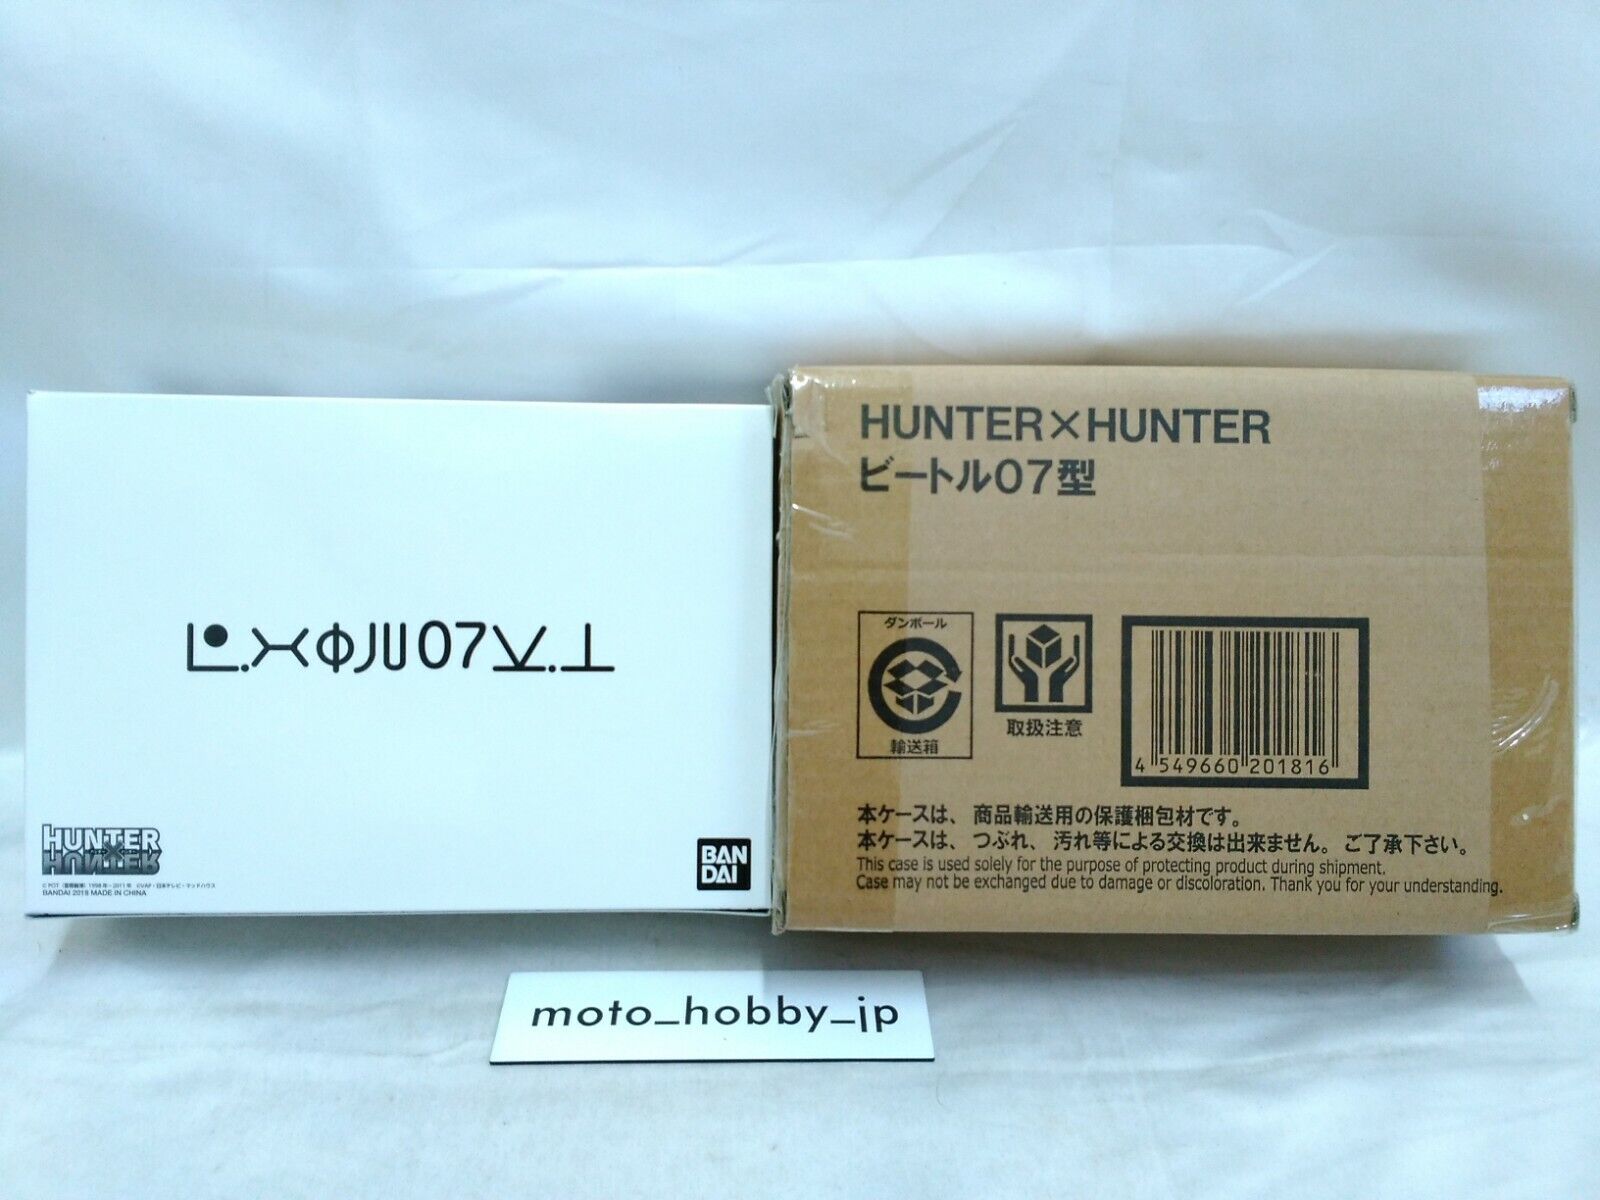 NEW Premium Bandai HUNTER x HUNTER Beetle Type 07 iPhone Case for iPhone 6/7/8